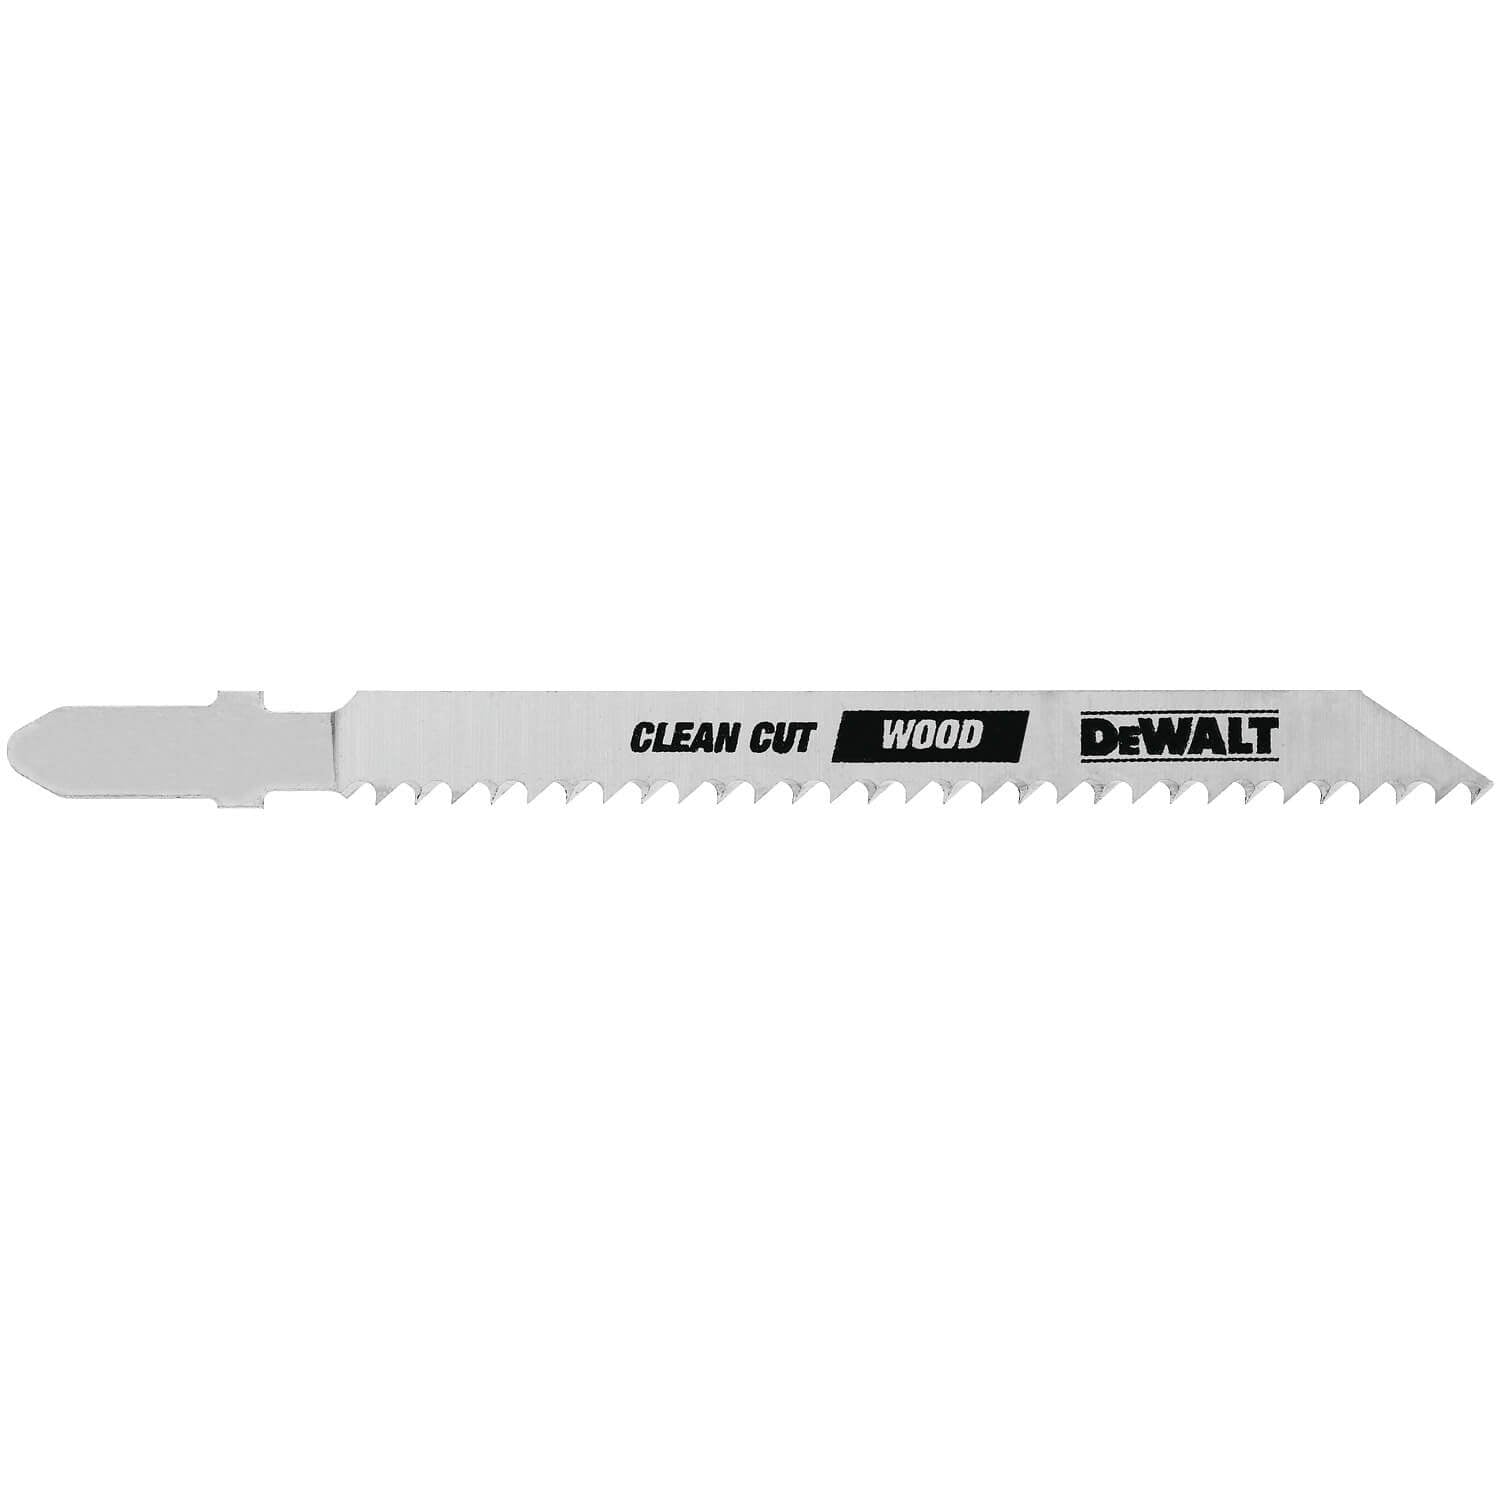 DEWALT DW3760-5 4-Inch 10TPI Fine Finish Wood Cut Cobalt Steel T-Shank Jig Saw Blade (5-Pack)